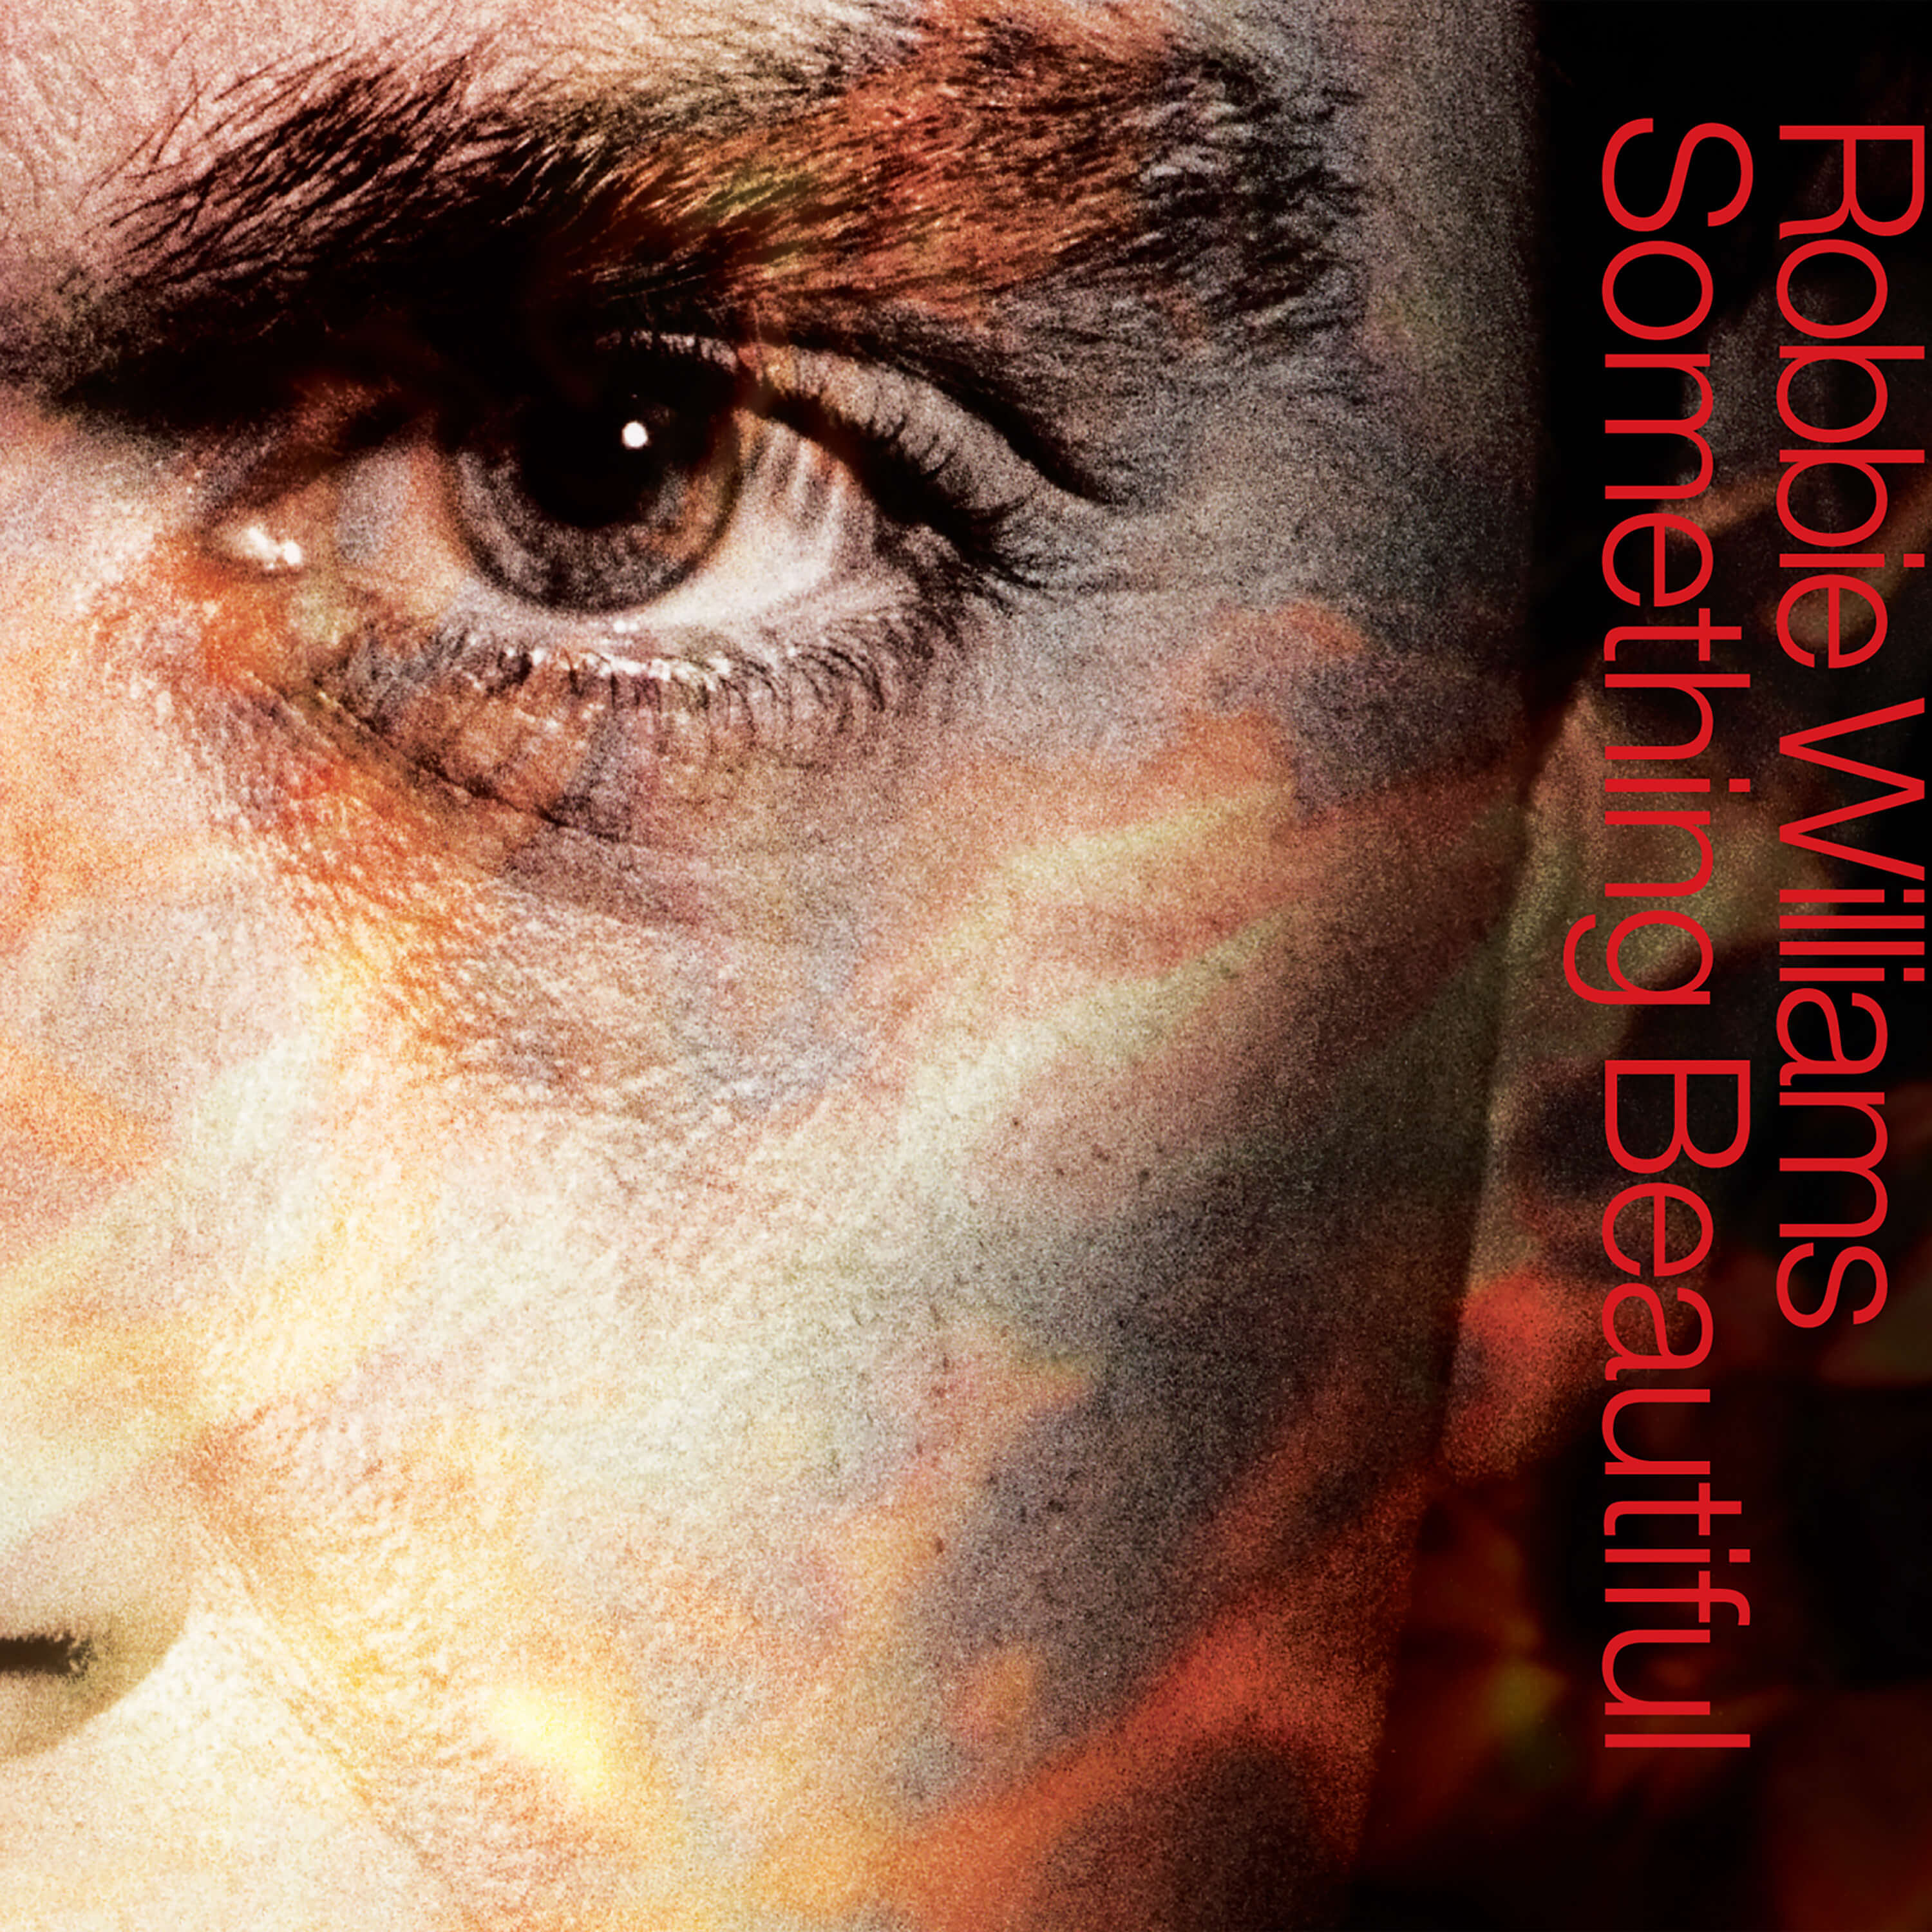 Something is beautiful. Робби Уильямс альбомы. Something beautiful Робби Уильямс. Робби Уильямс обложки альбомов. Robbie Williams обложки.